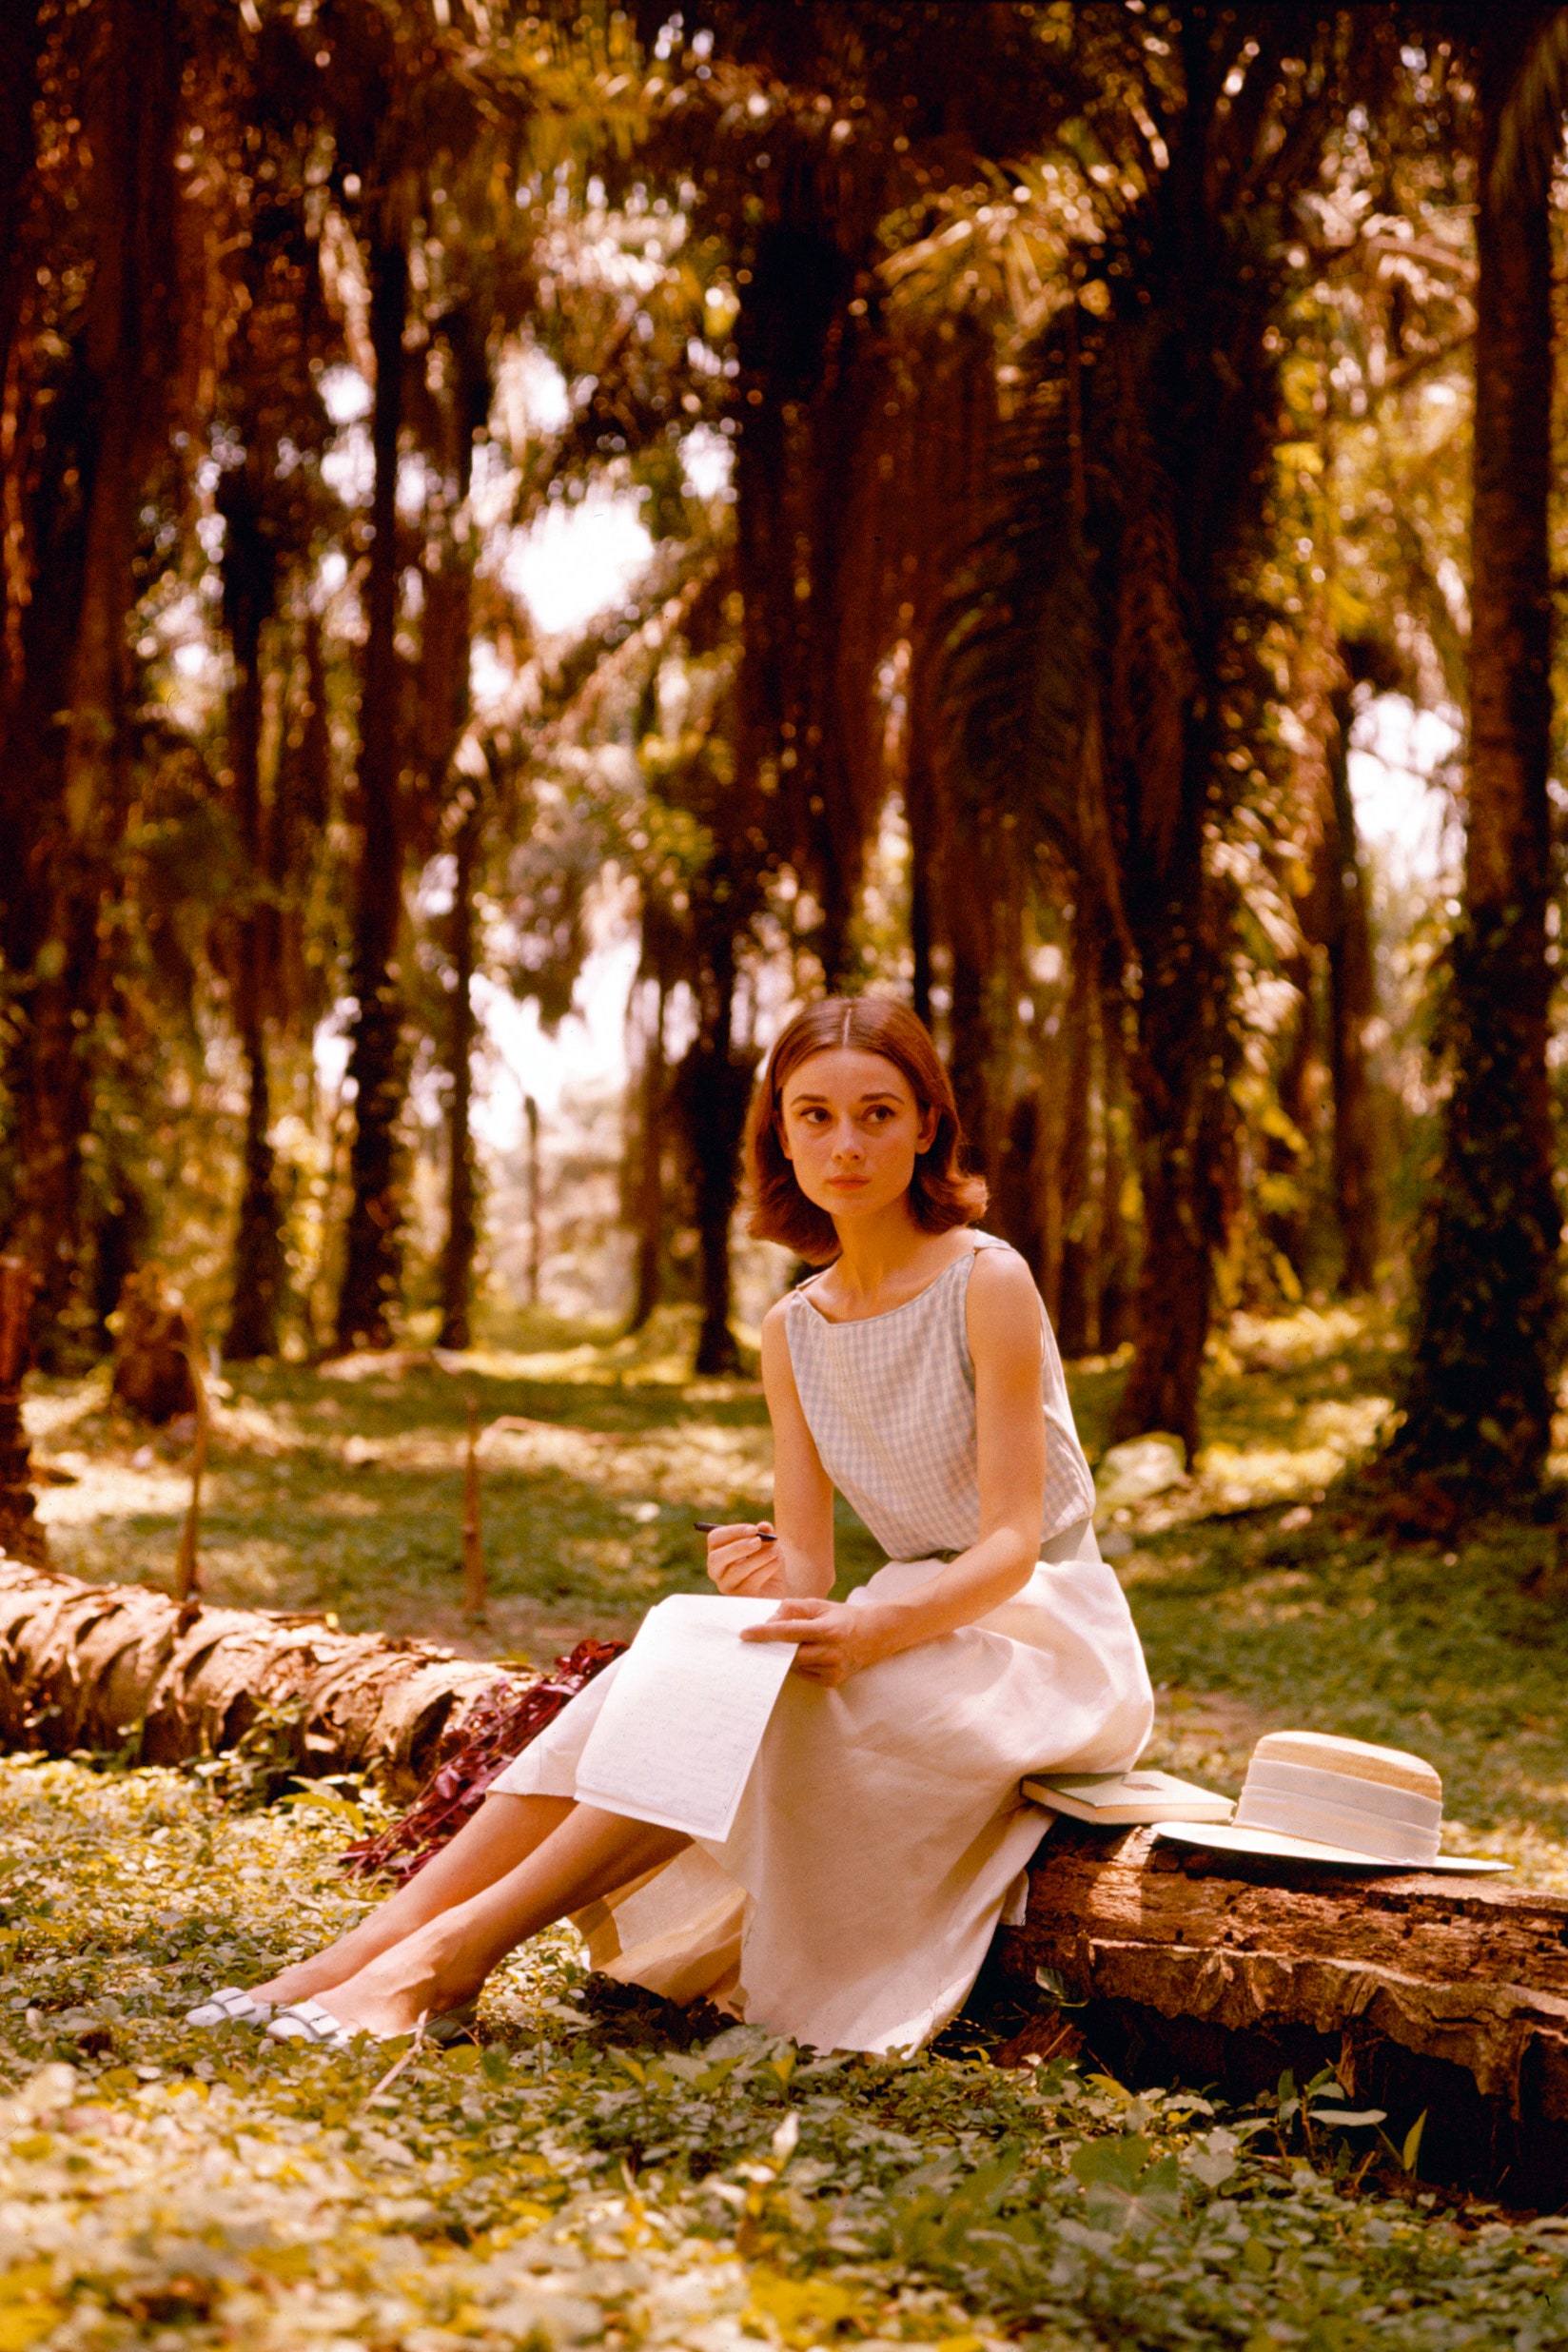 Belgian born actress Audrey Hepburn  writing a letter in a palm grove circa 1955.